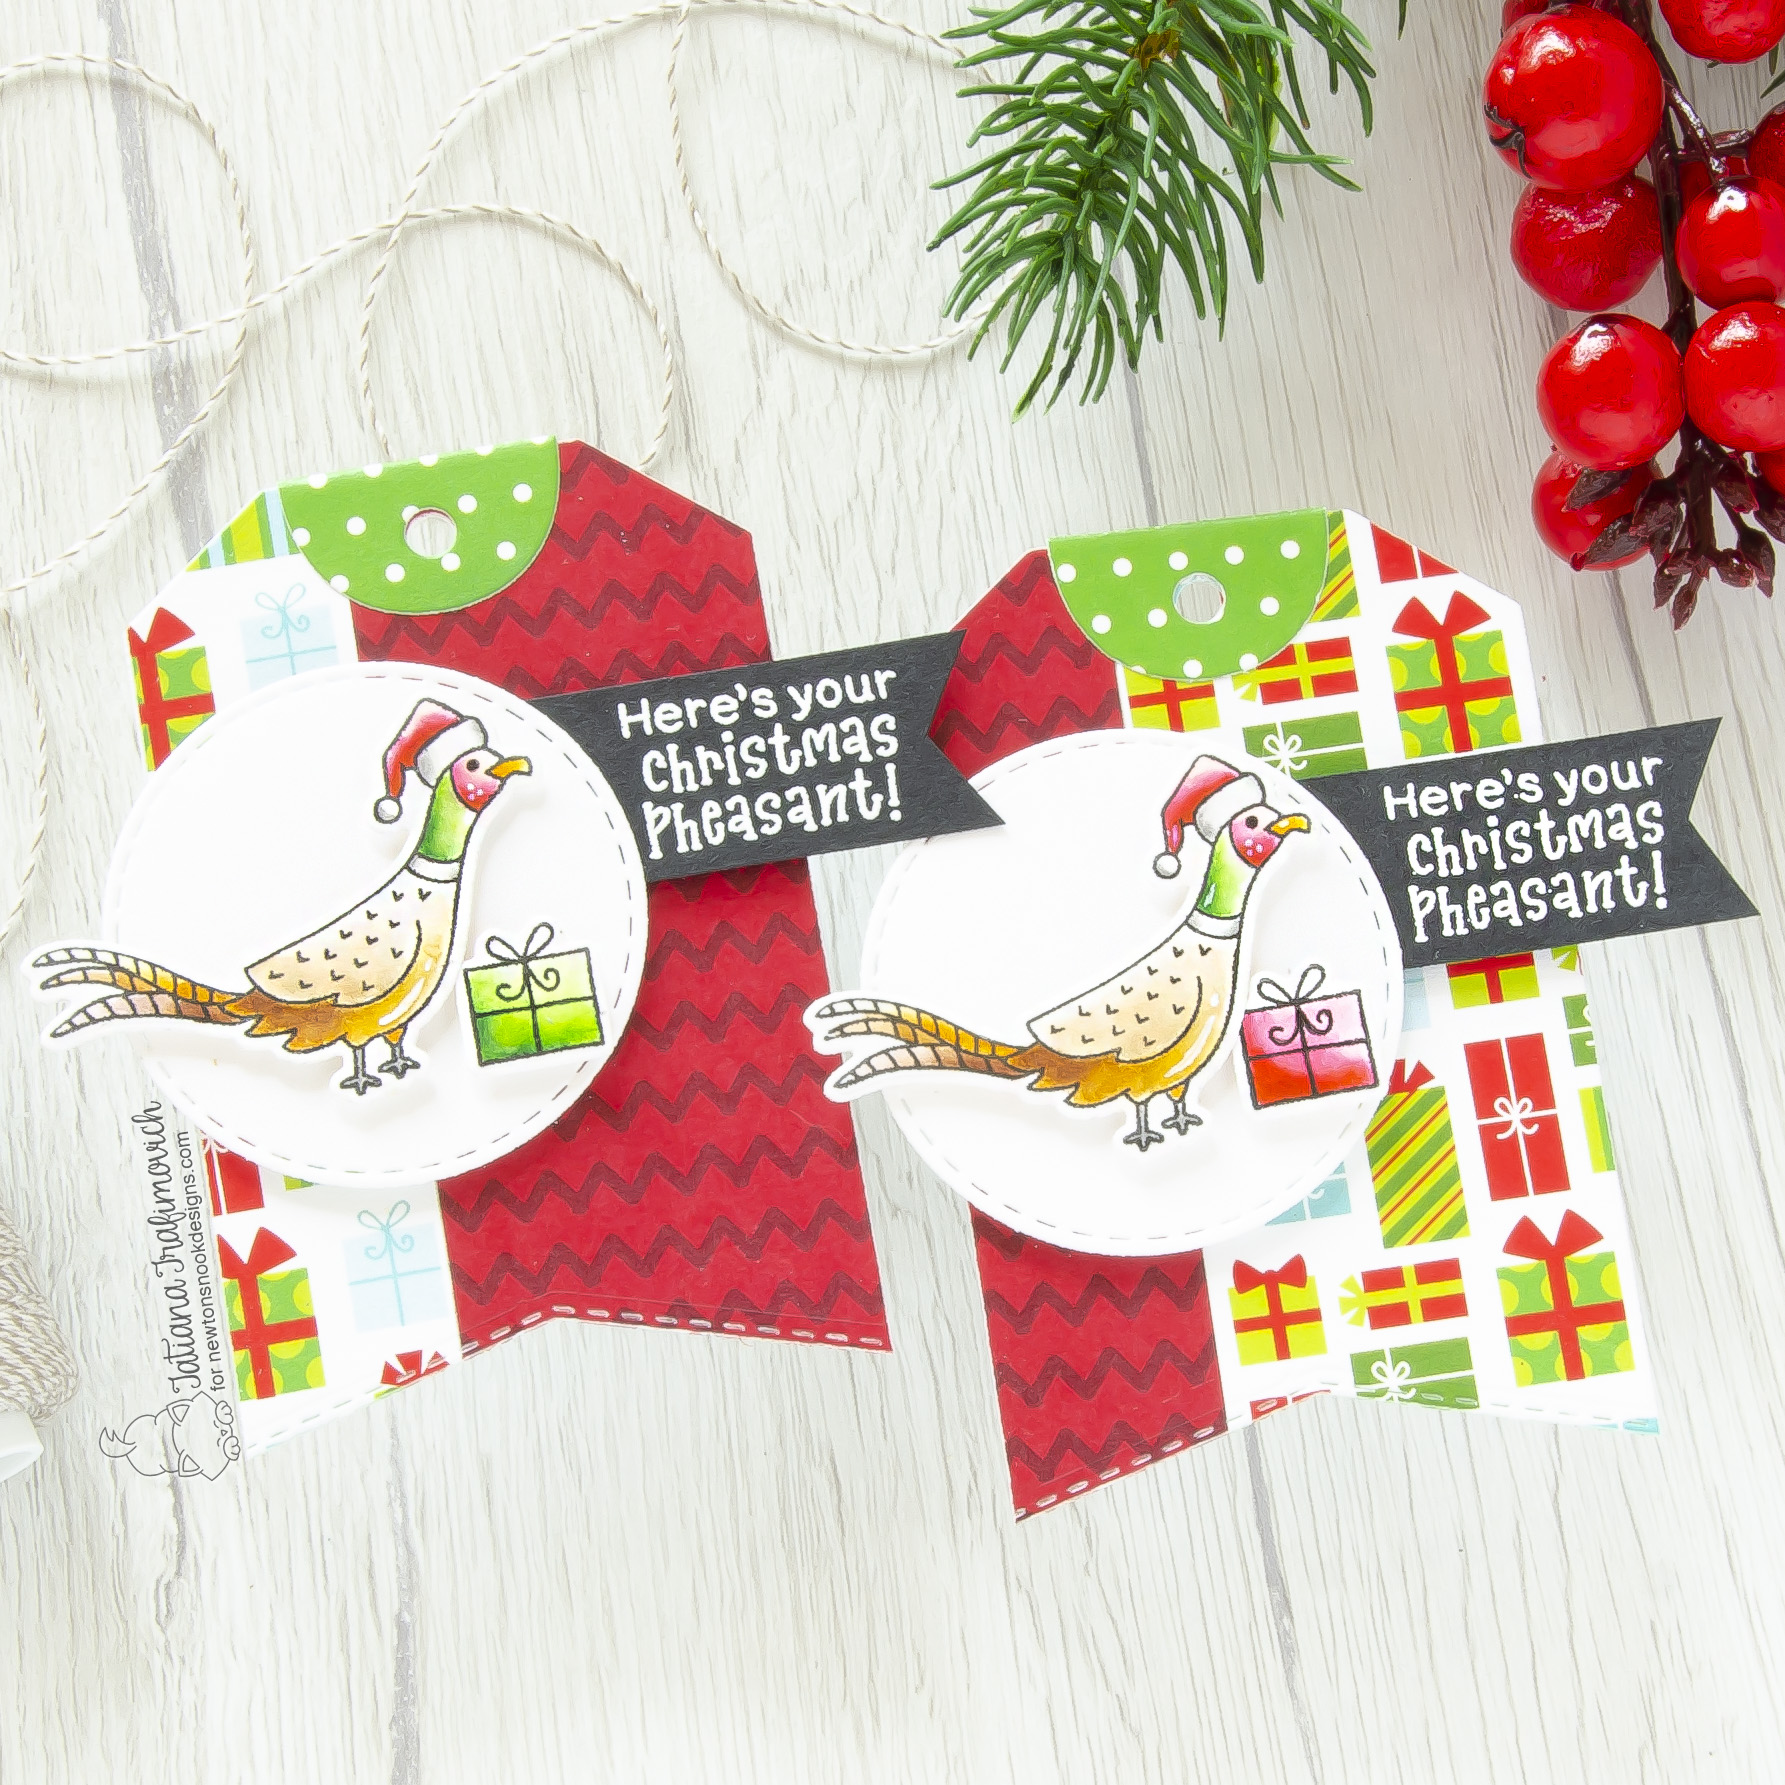 #handmade Christmas Tags by Tatiana Trafimovich #tatianacraftandart - Christmas Pheasant stamp set by Newton's Nook Designs #newtonsnook